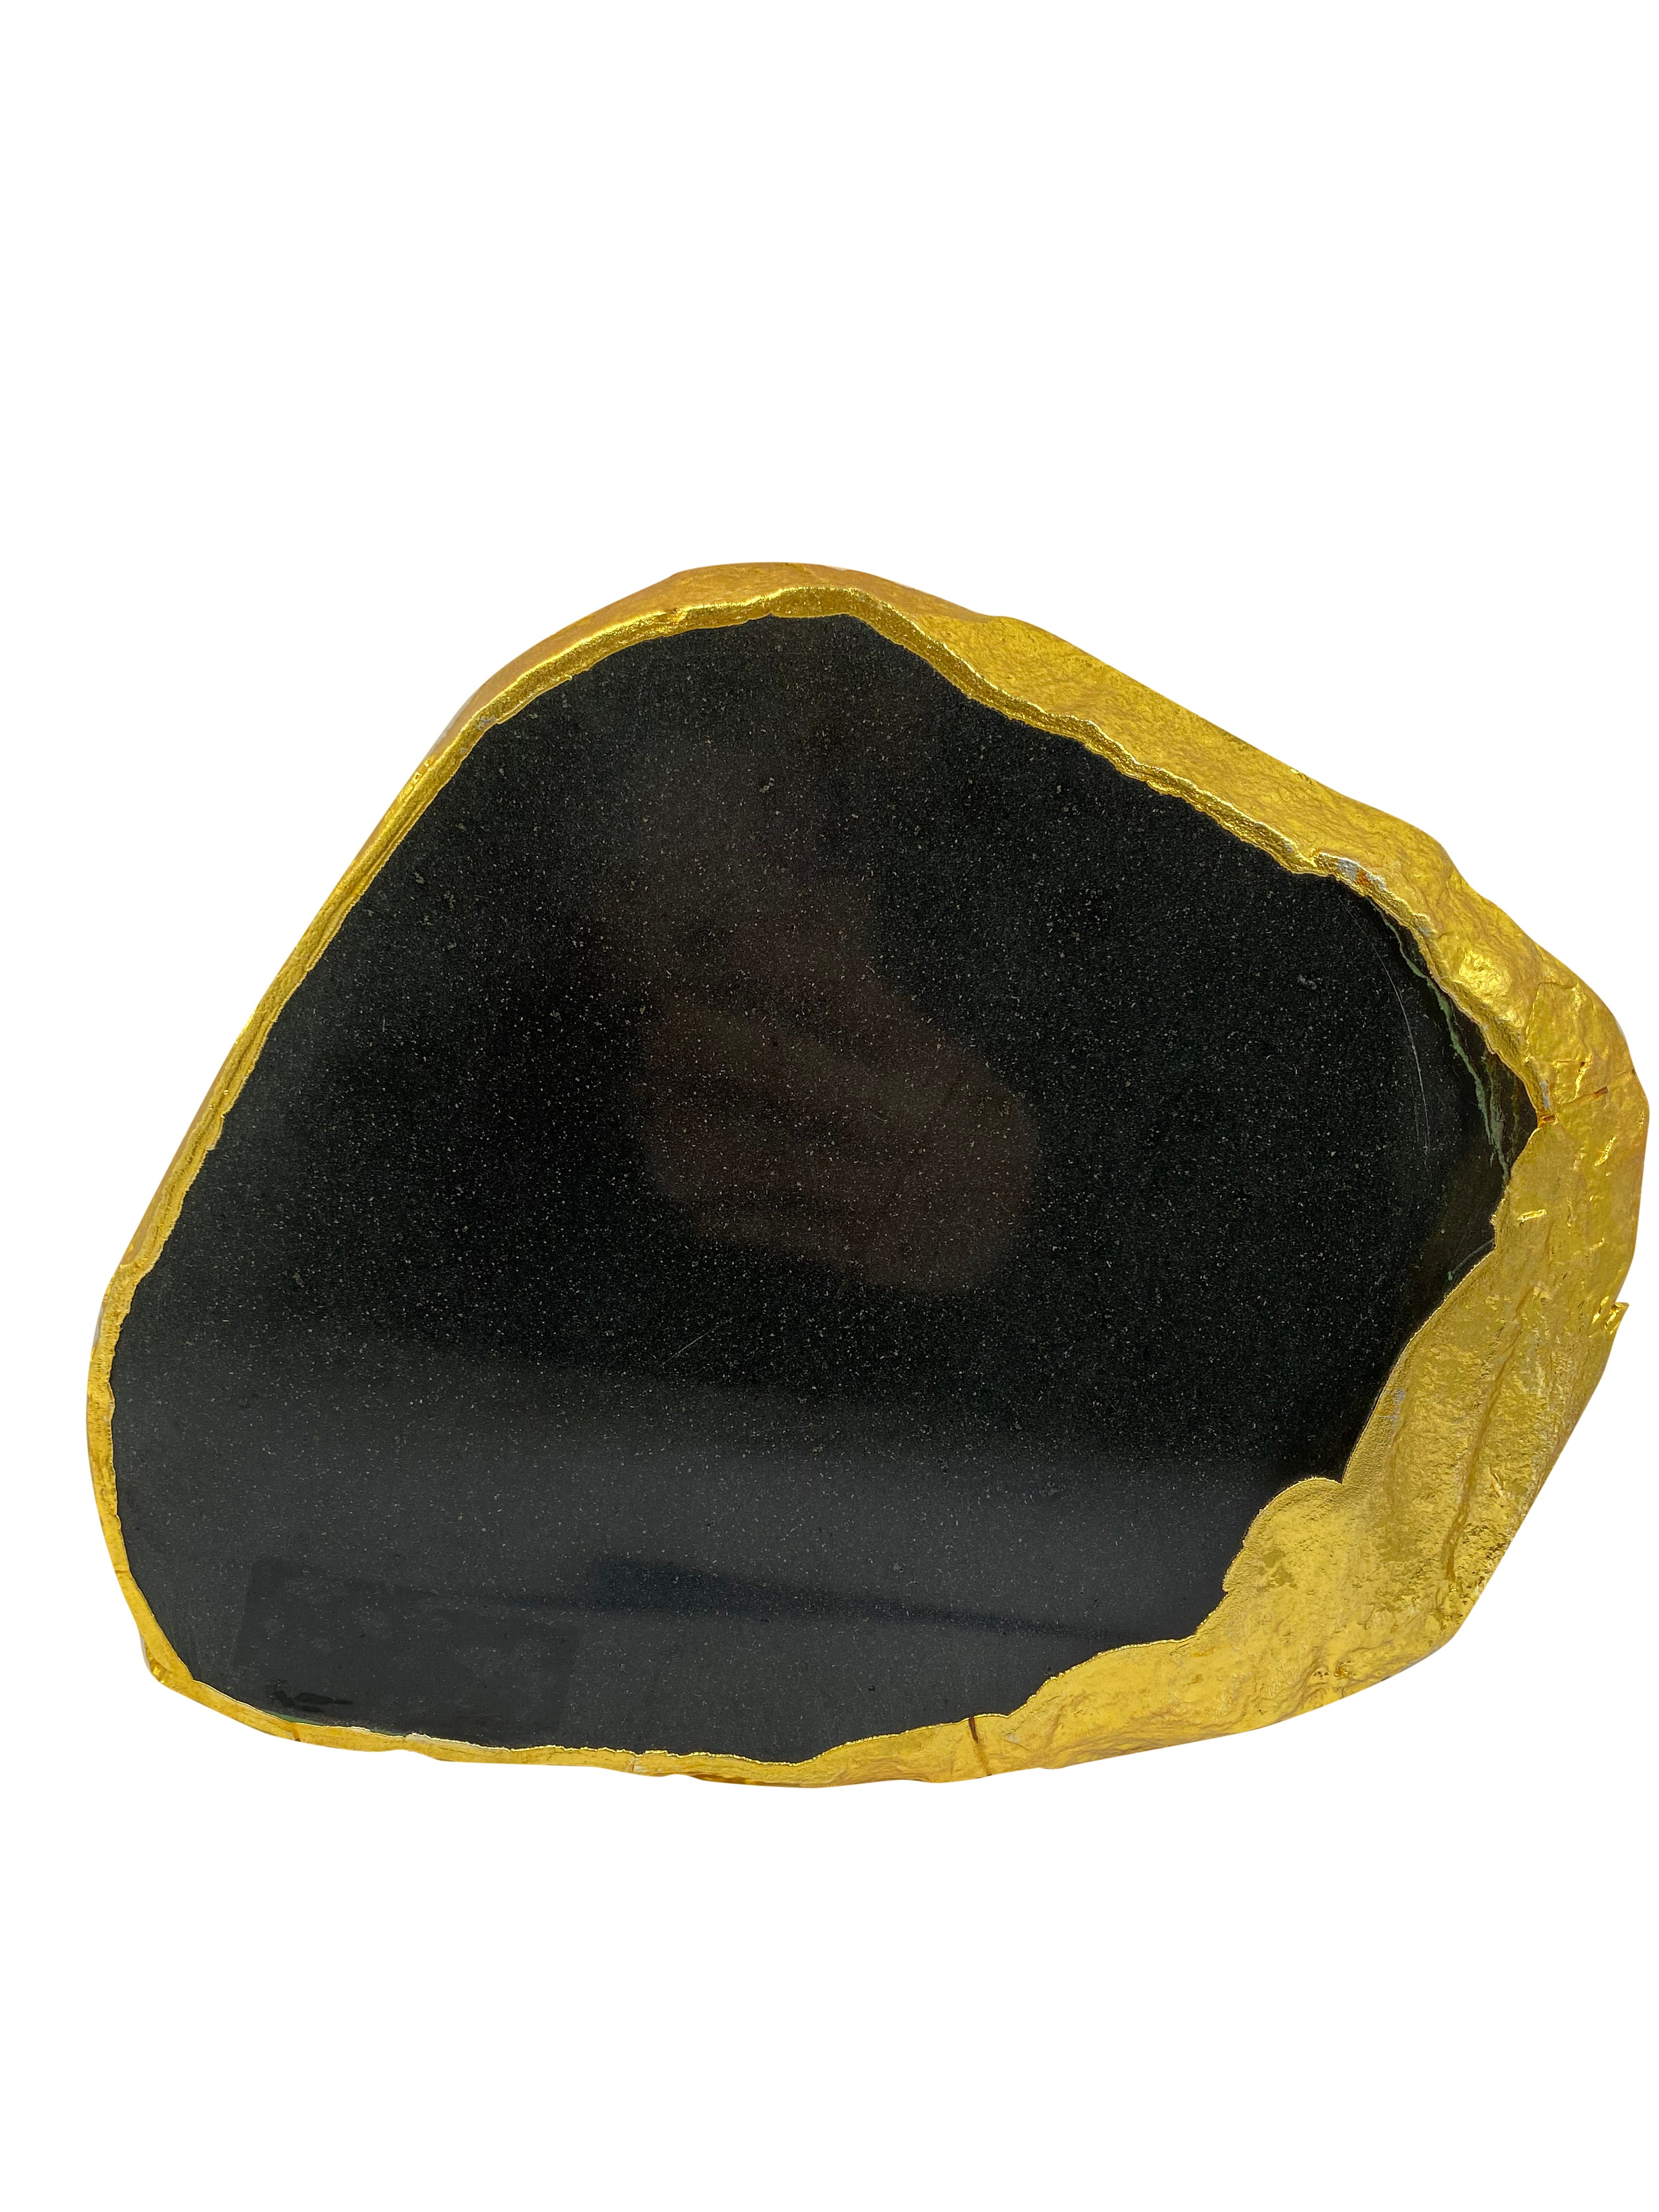 Black Agate Crystal Plater B - 1.6KG